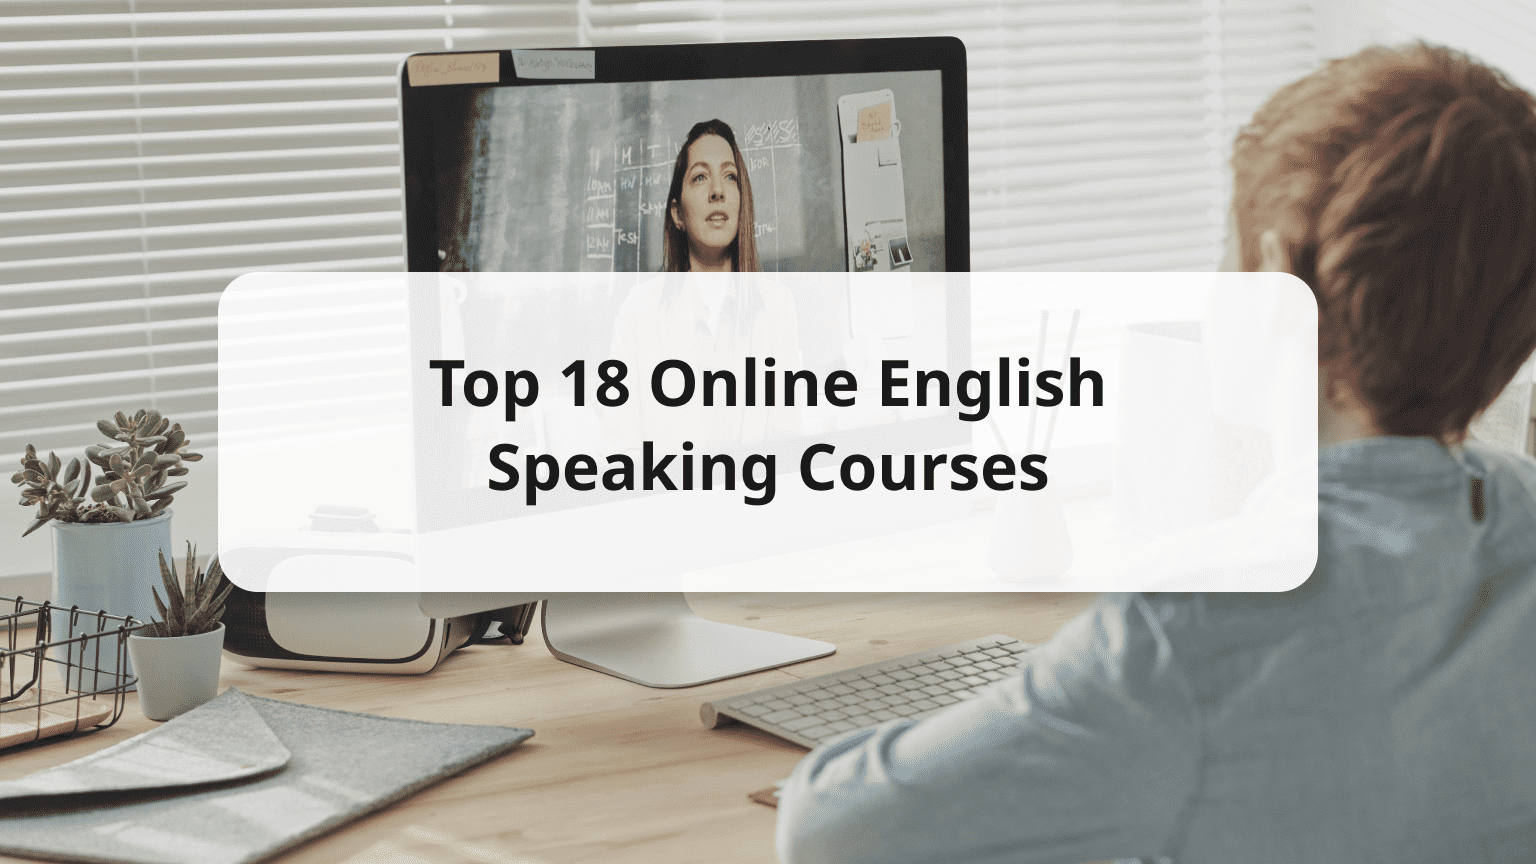 Top 18 Online English Speaking Courses: Speak English Fluently